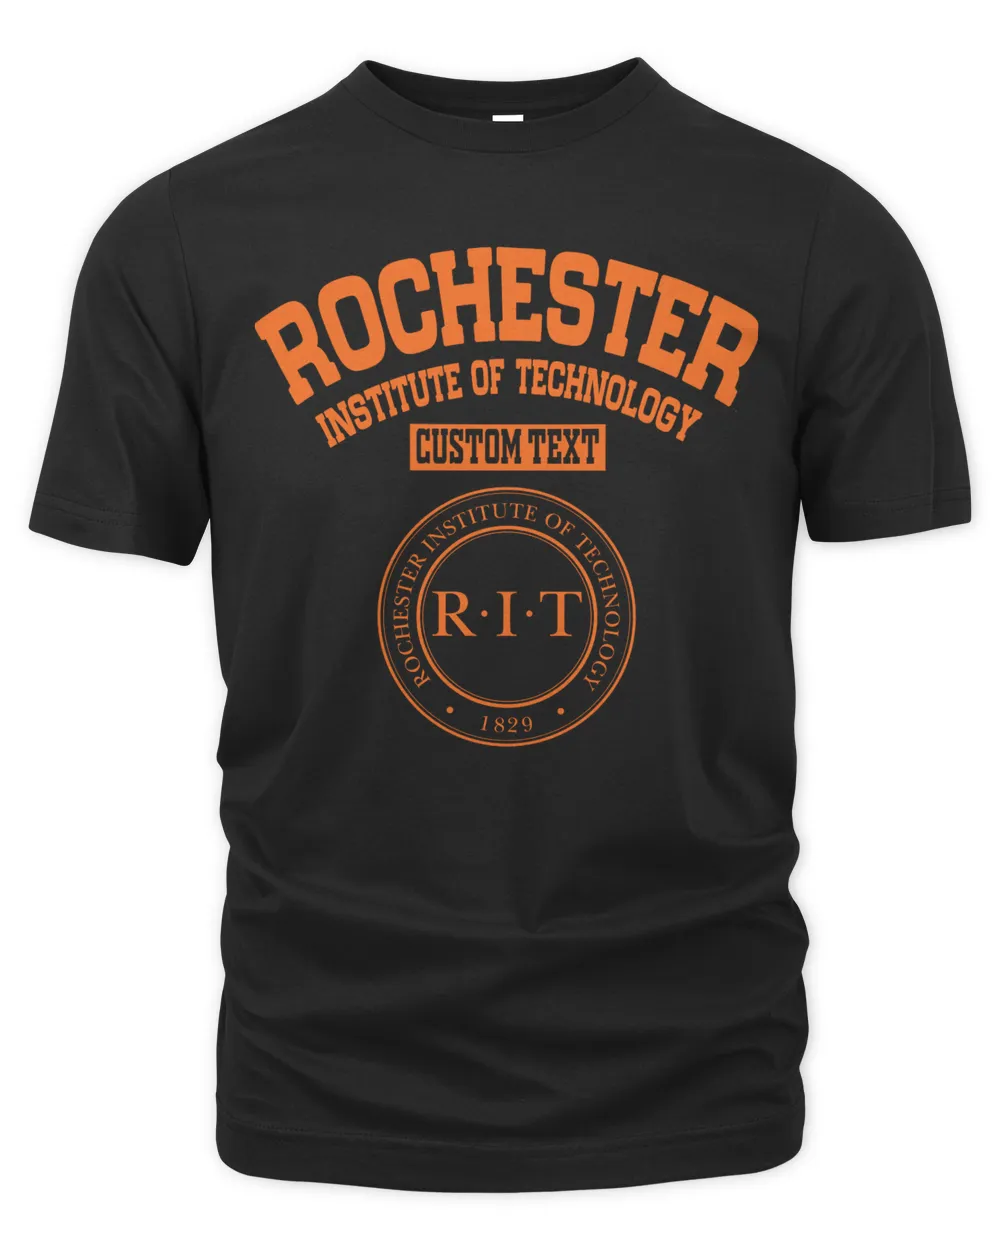 Rochester Institute of Tech Lgo01